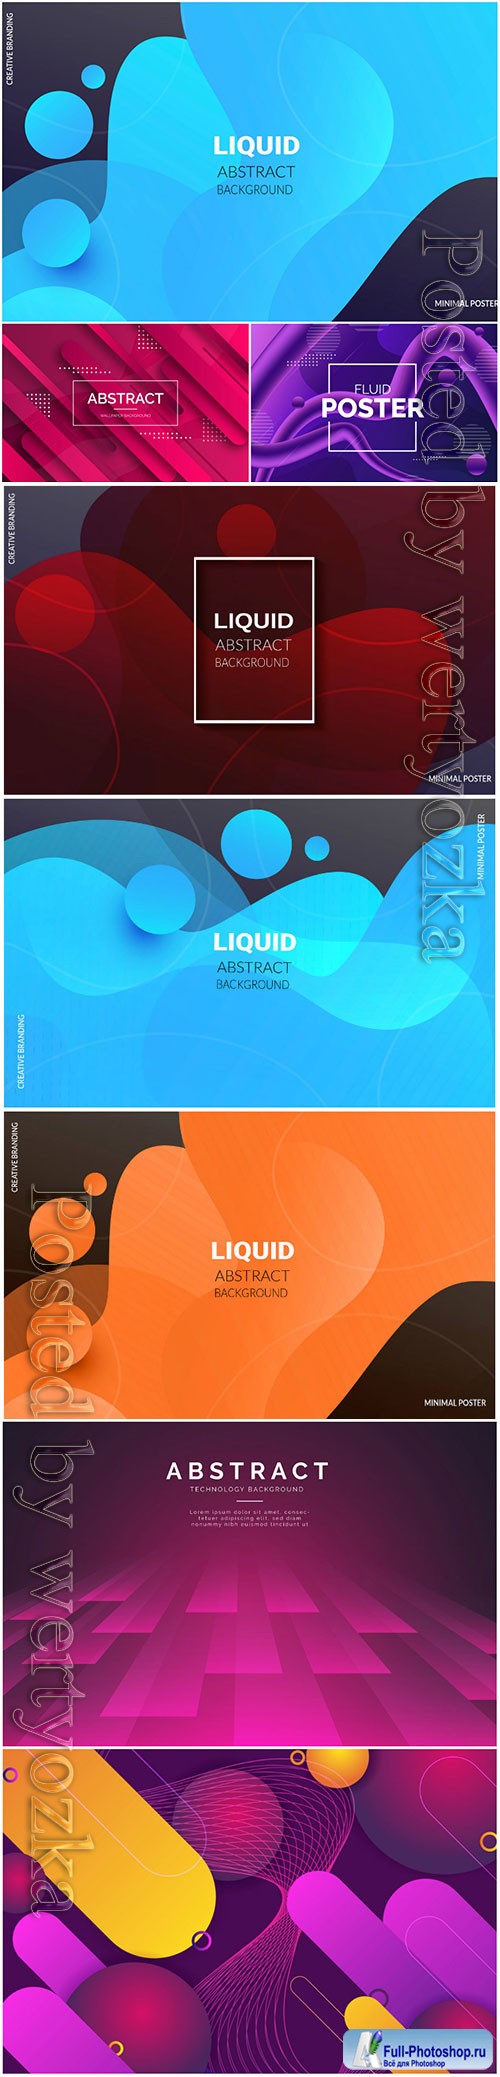 Liquid vector abstract background